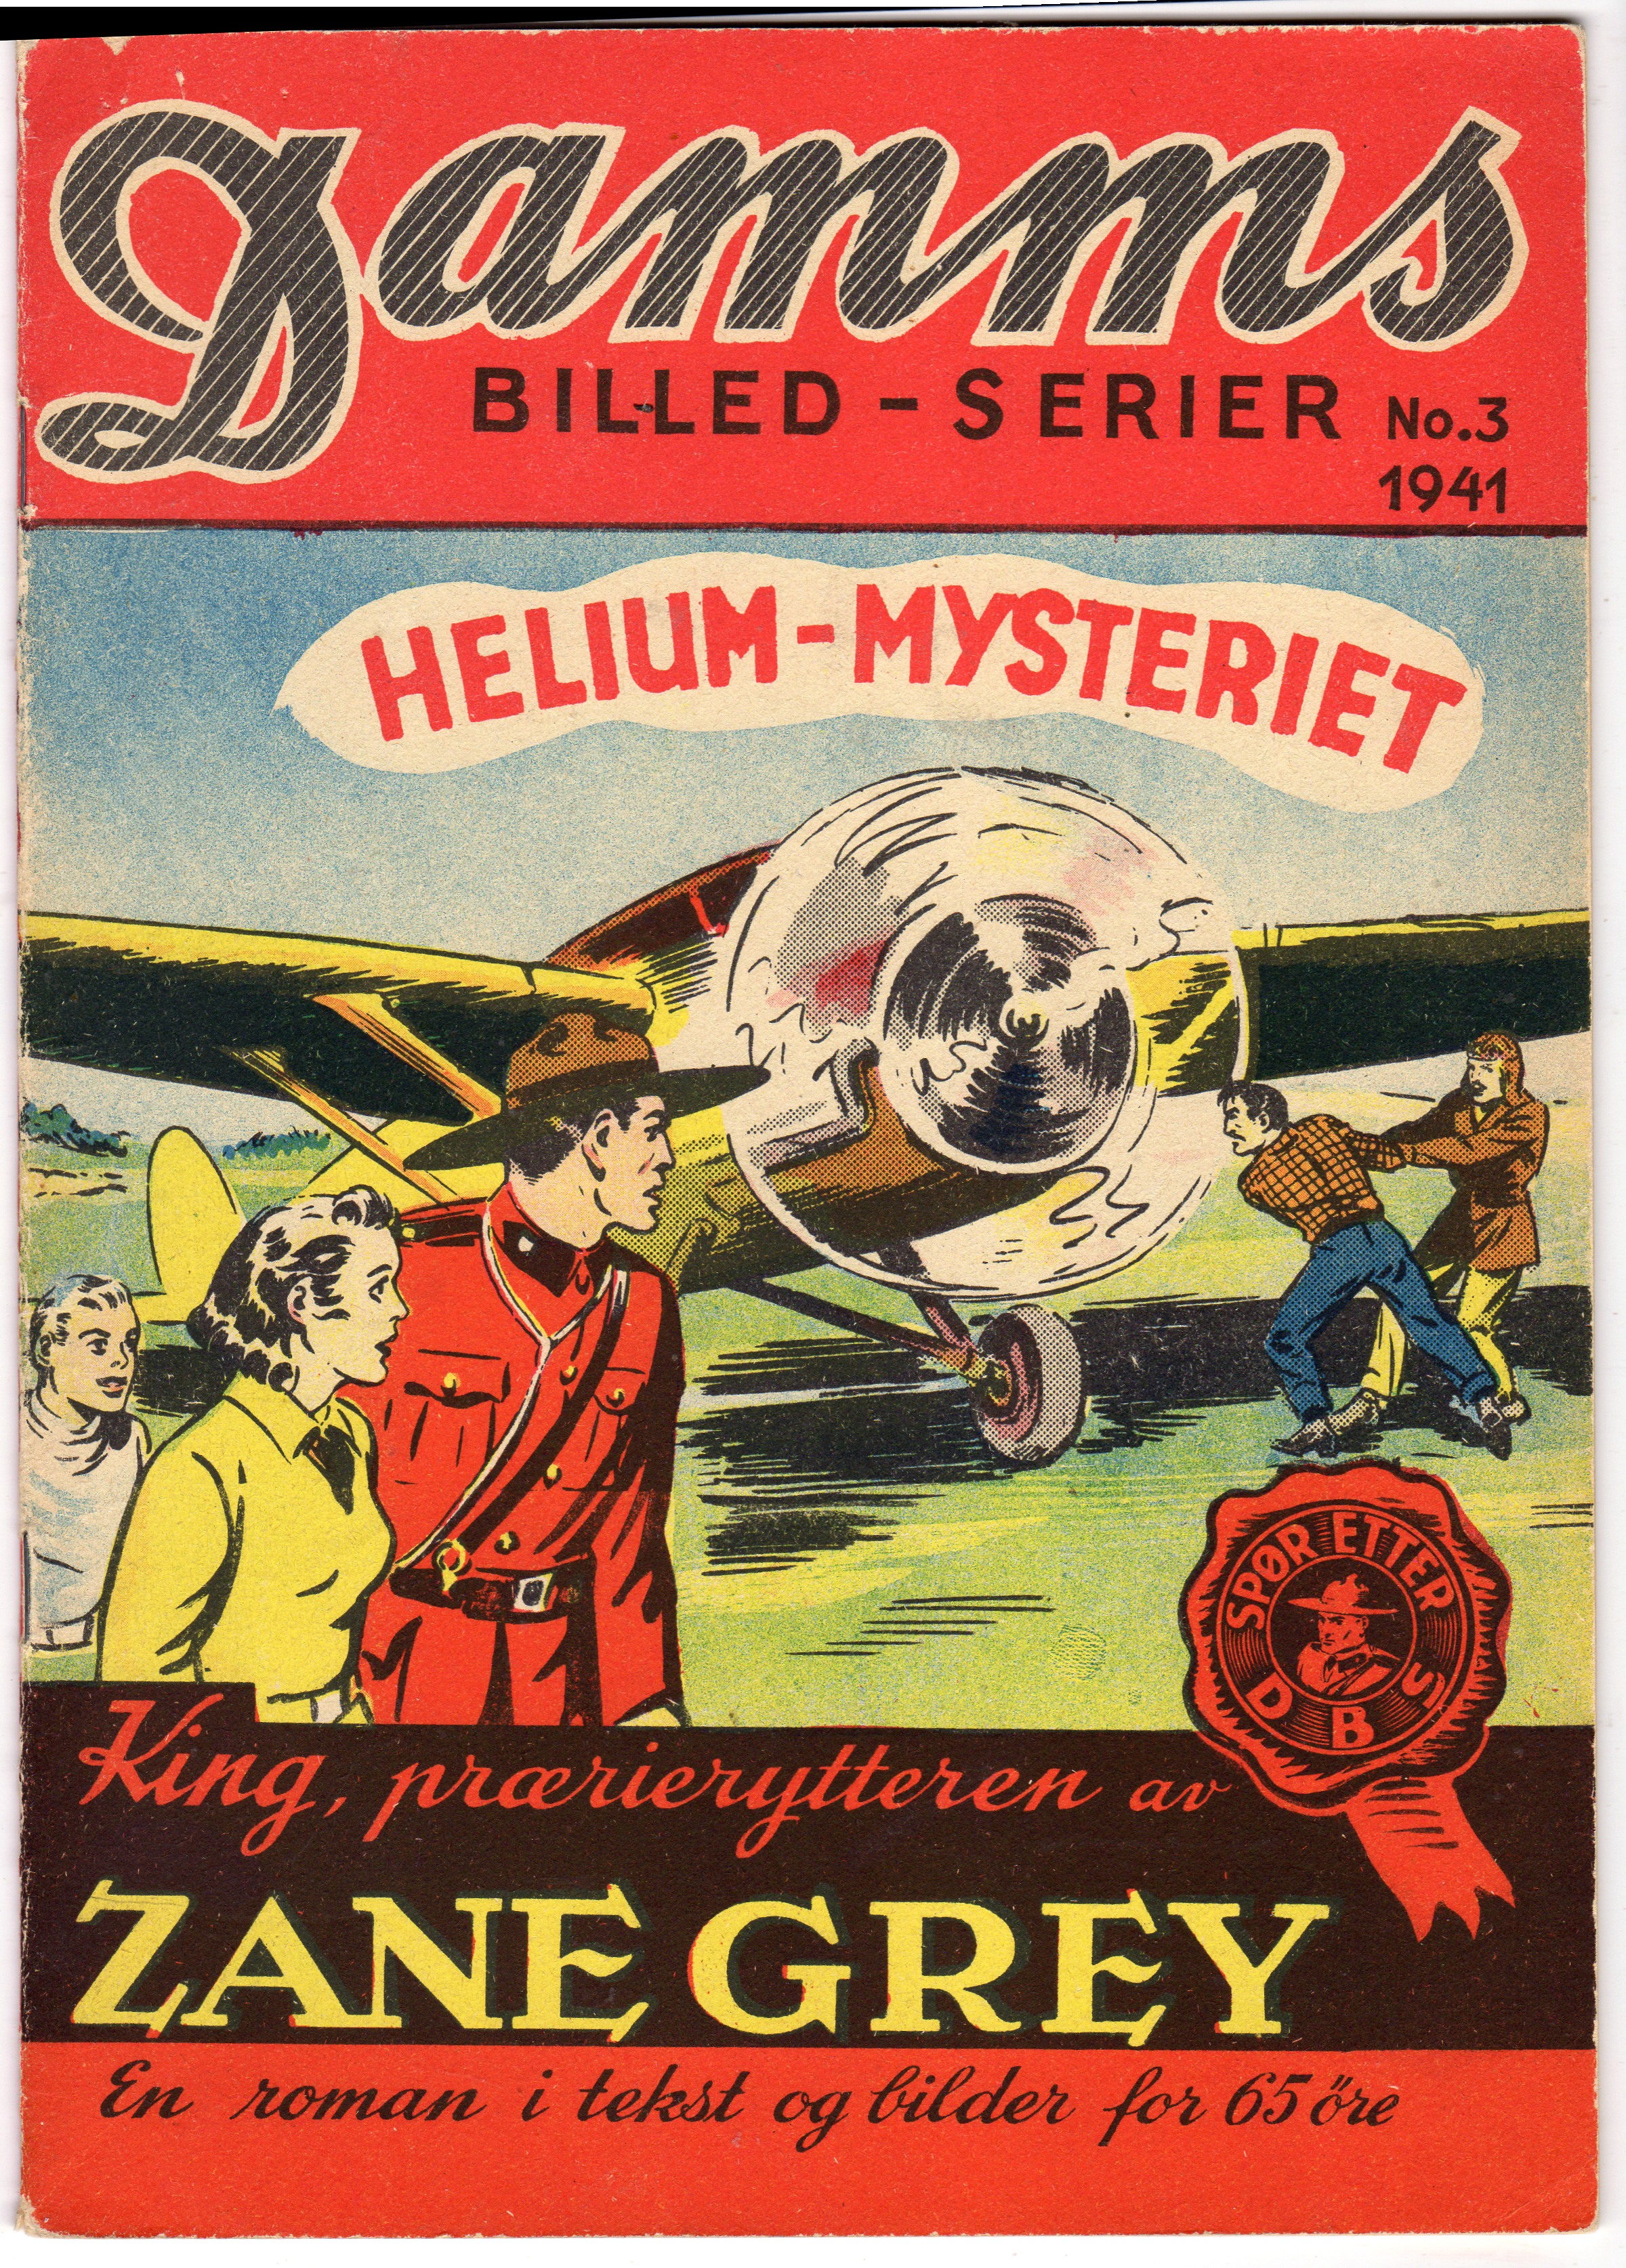 no 3 1941 Zane Gray Helium-mysteriet vf